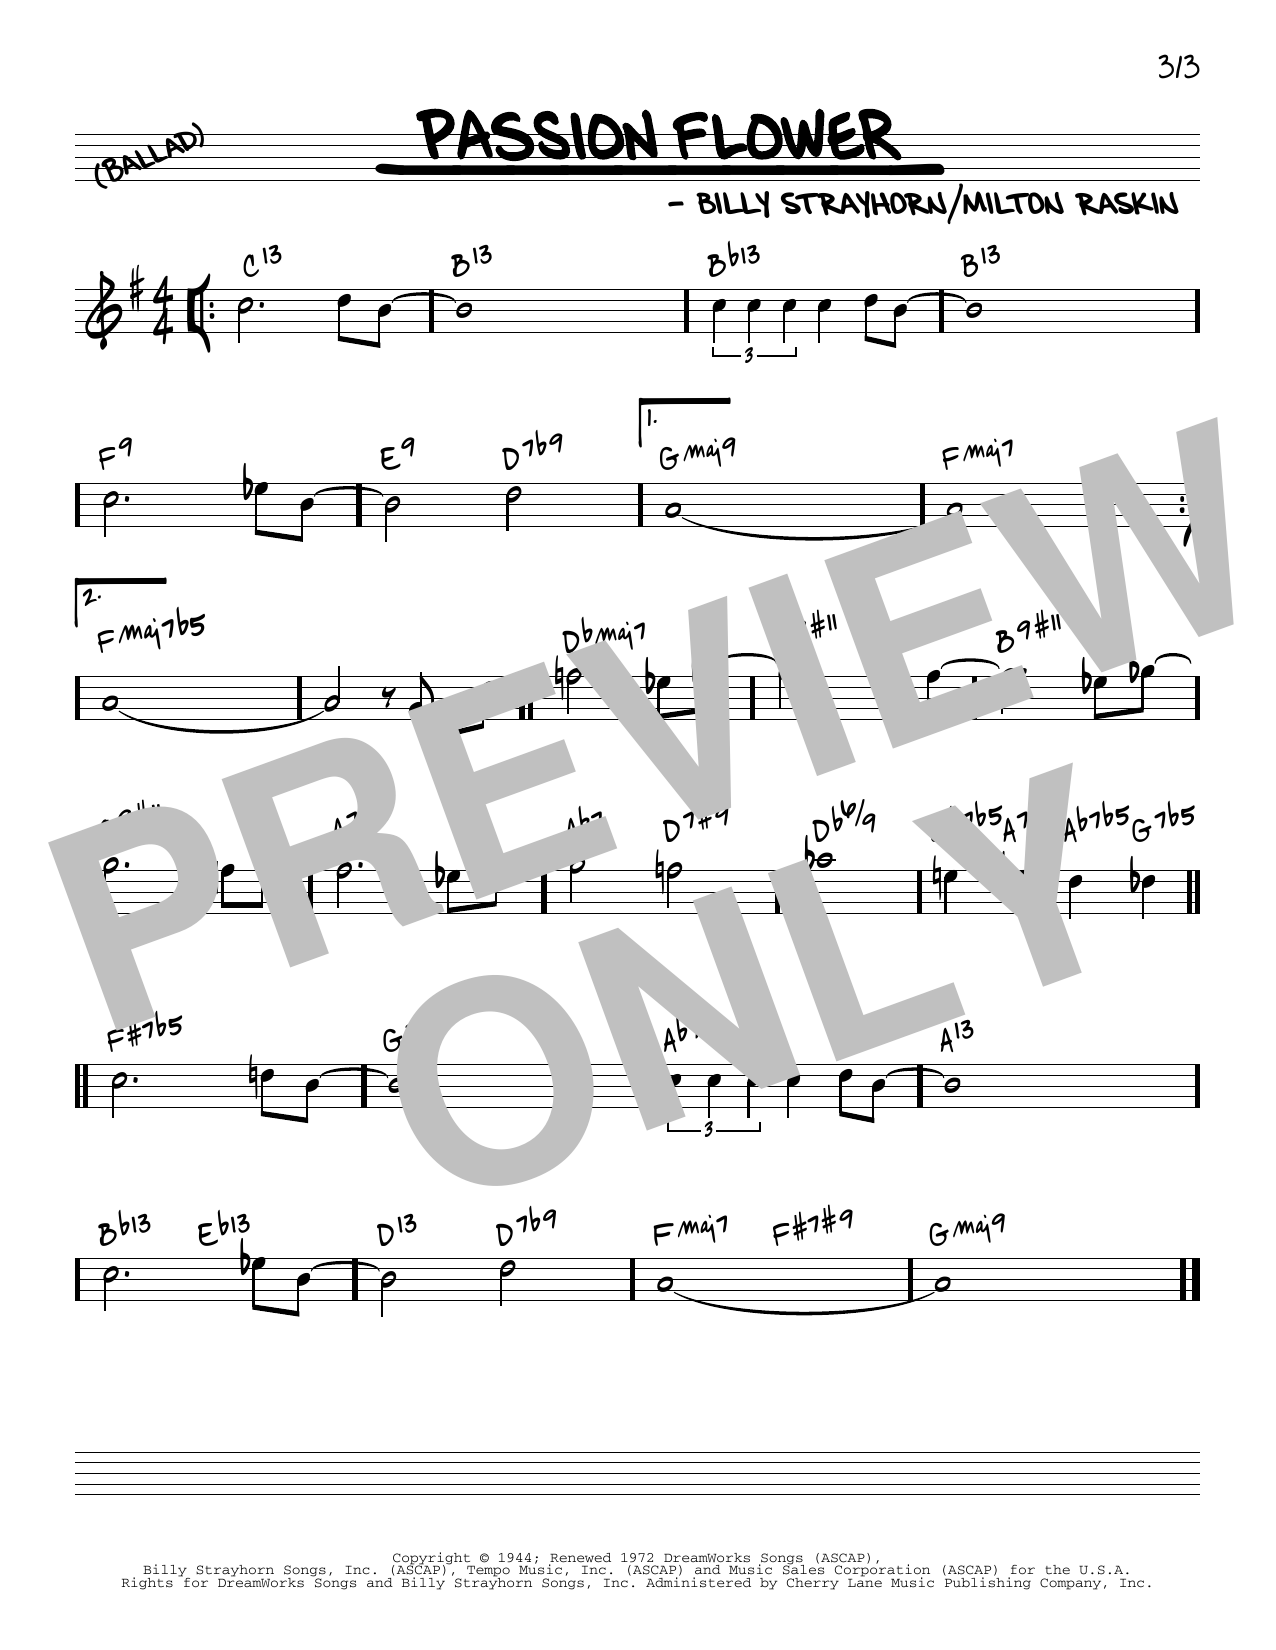 Download Billy Strayhorn Passion Flower [Reharmonized version] ( Sheet Music